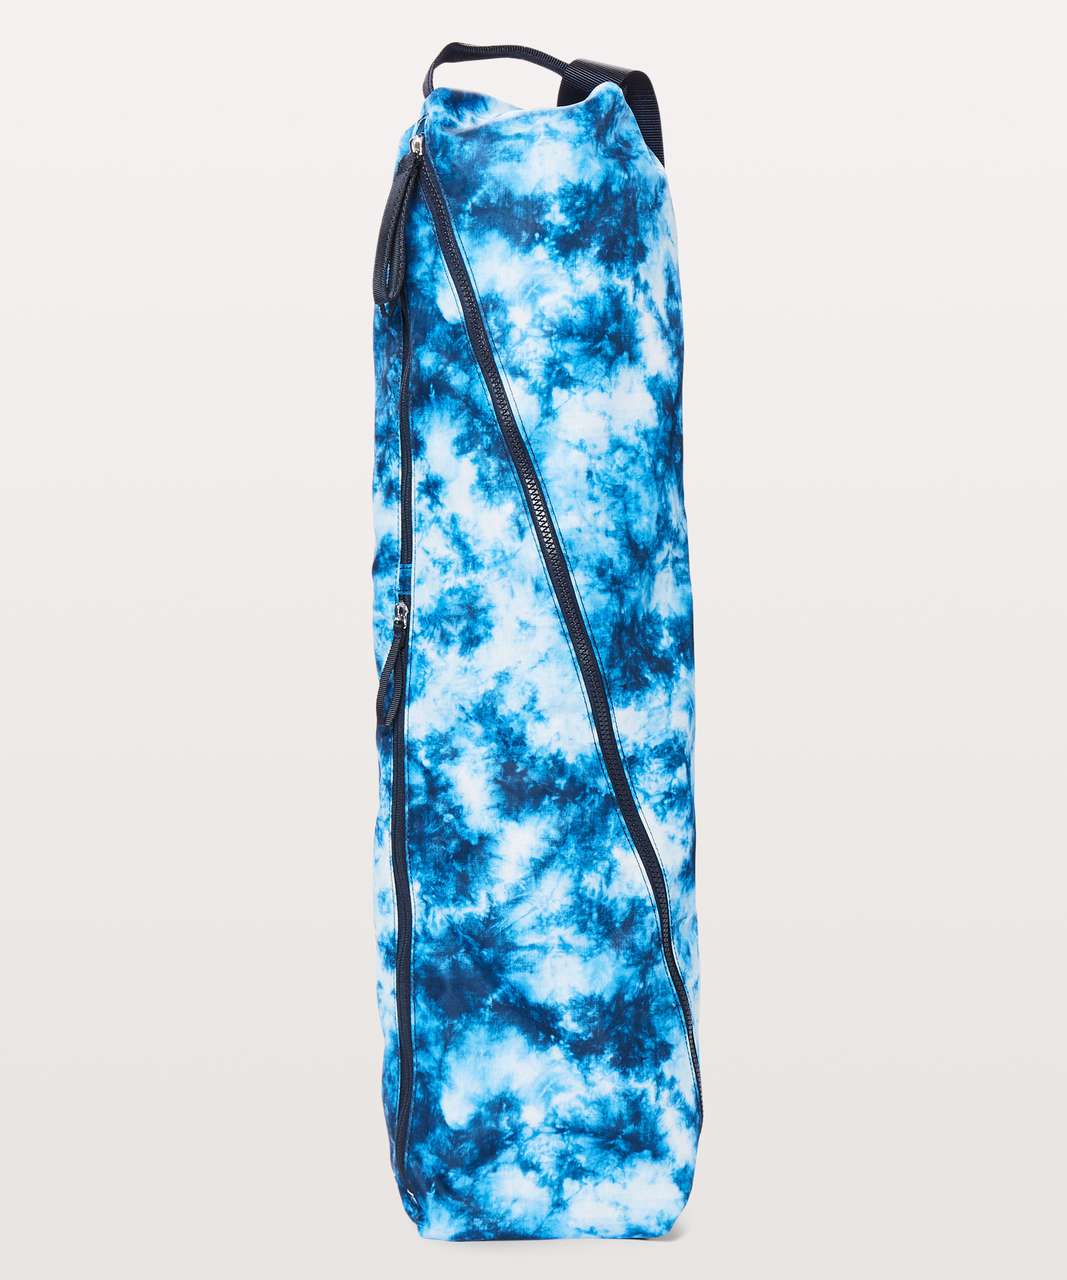 Lululemon The Yoga Bag *14L - Tie Dye Blue